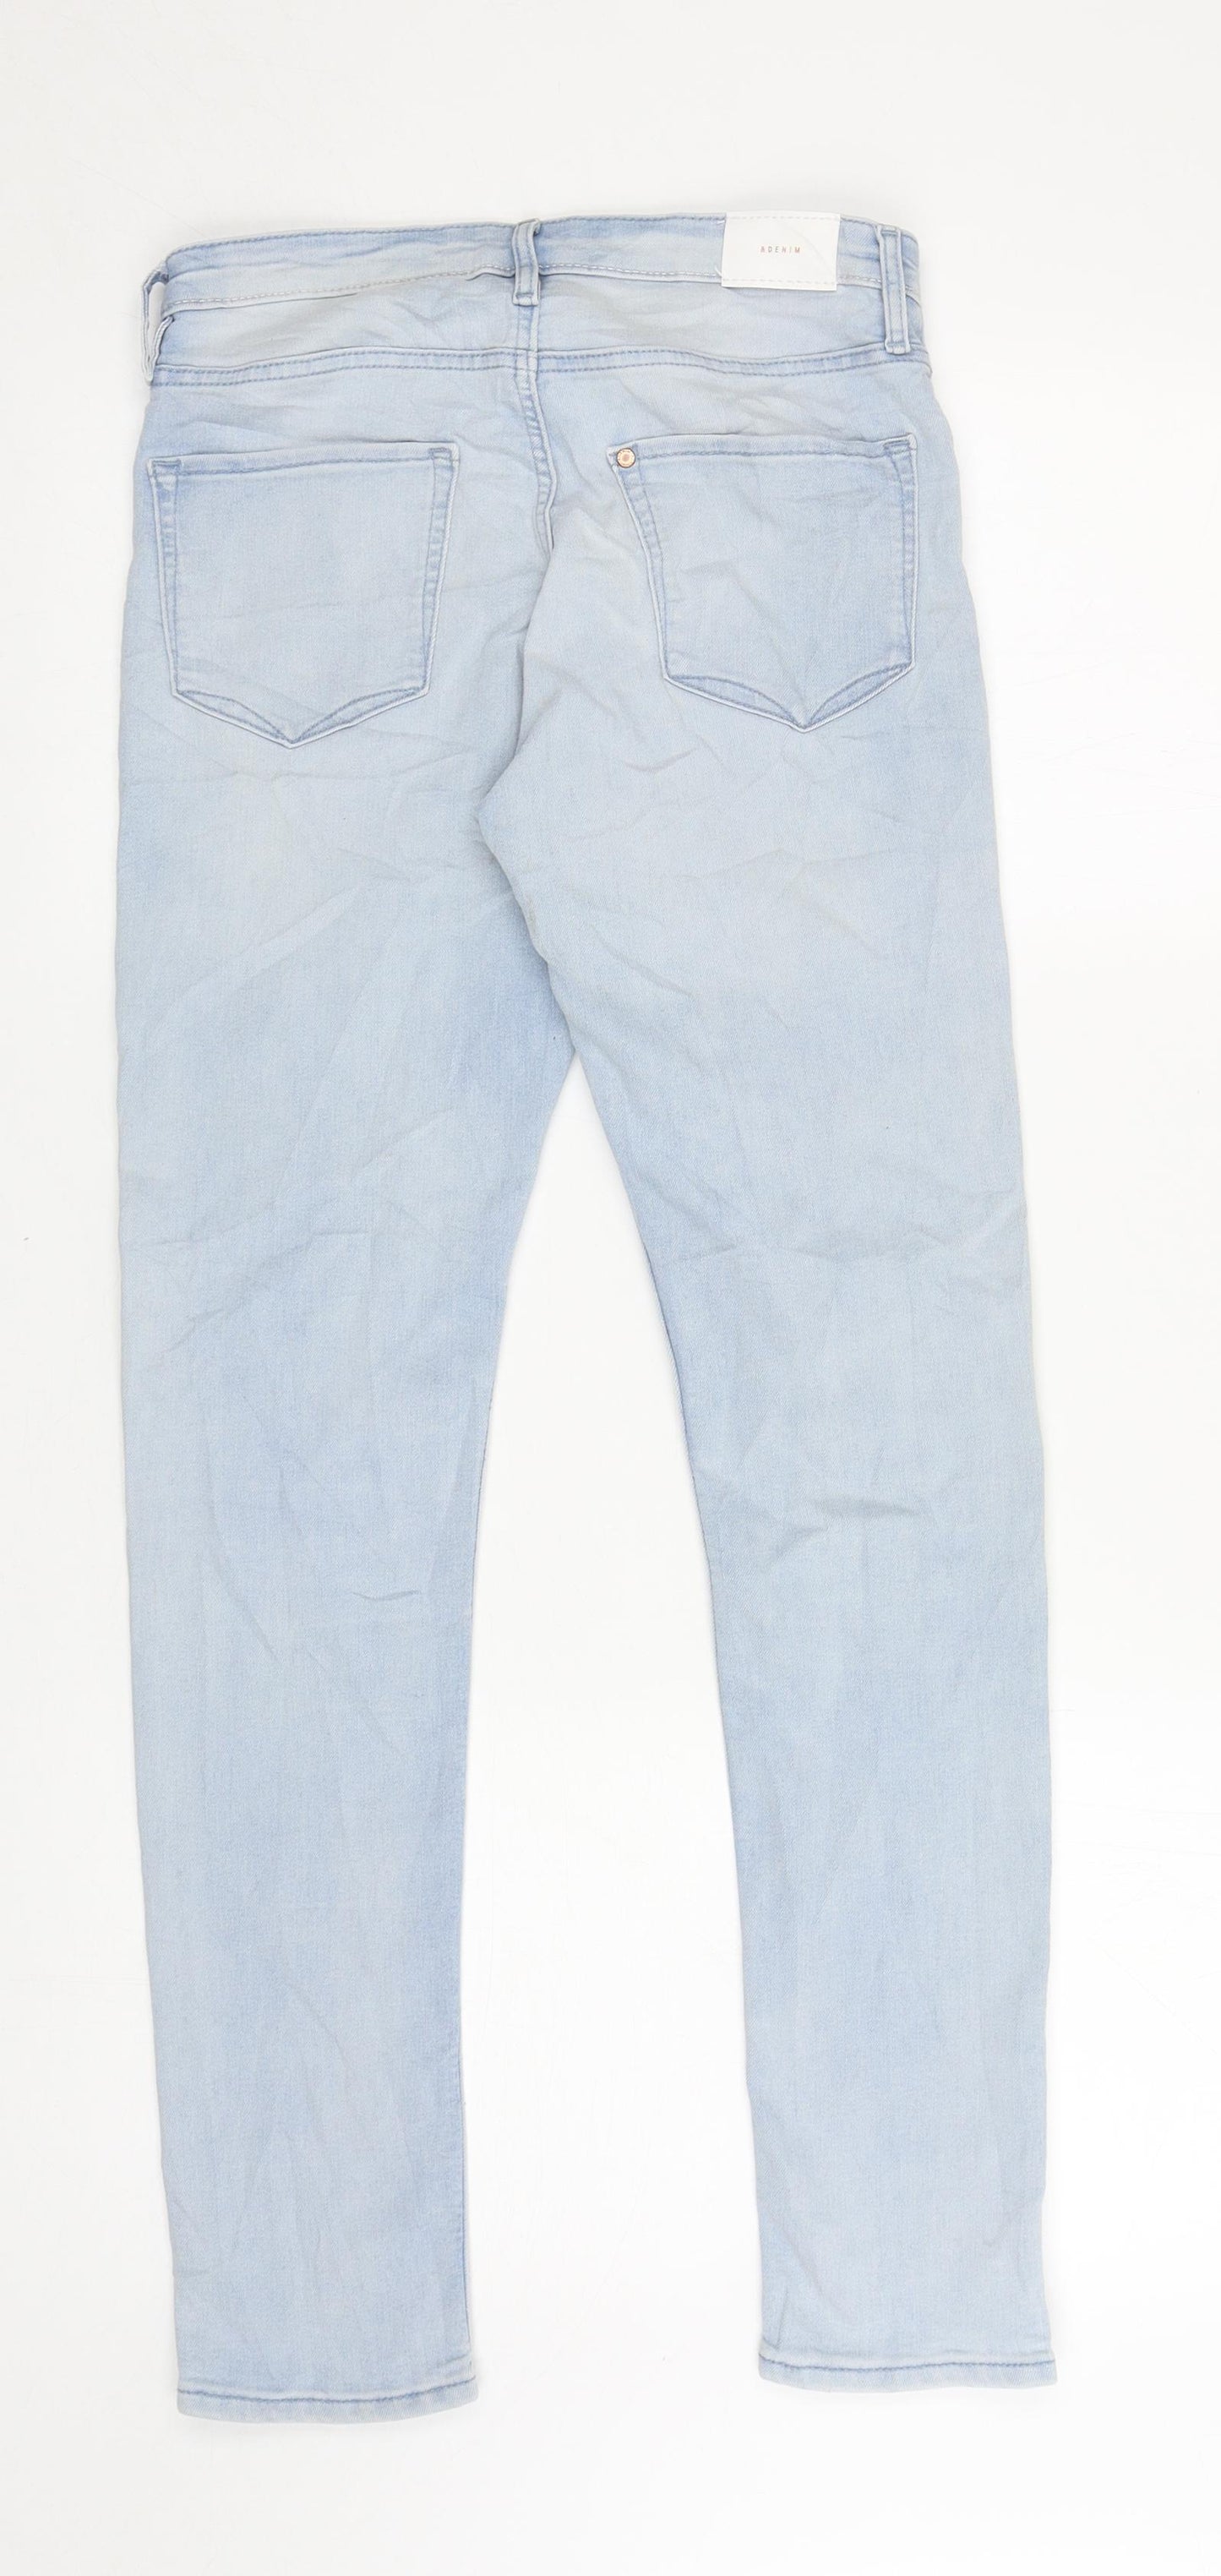 & Denim Girls Blue Cotton Skinny Jeans Size 13-14 Years L28.5 in Regular Zip